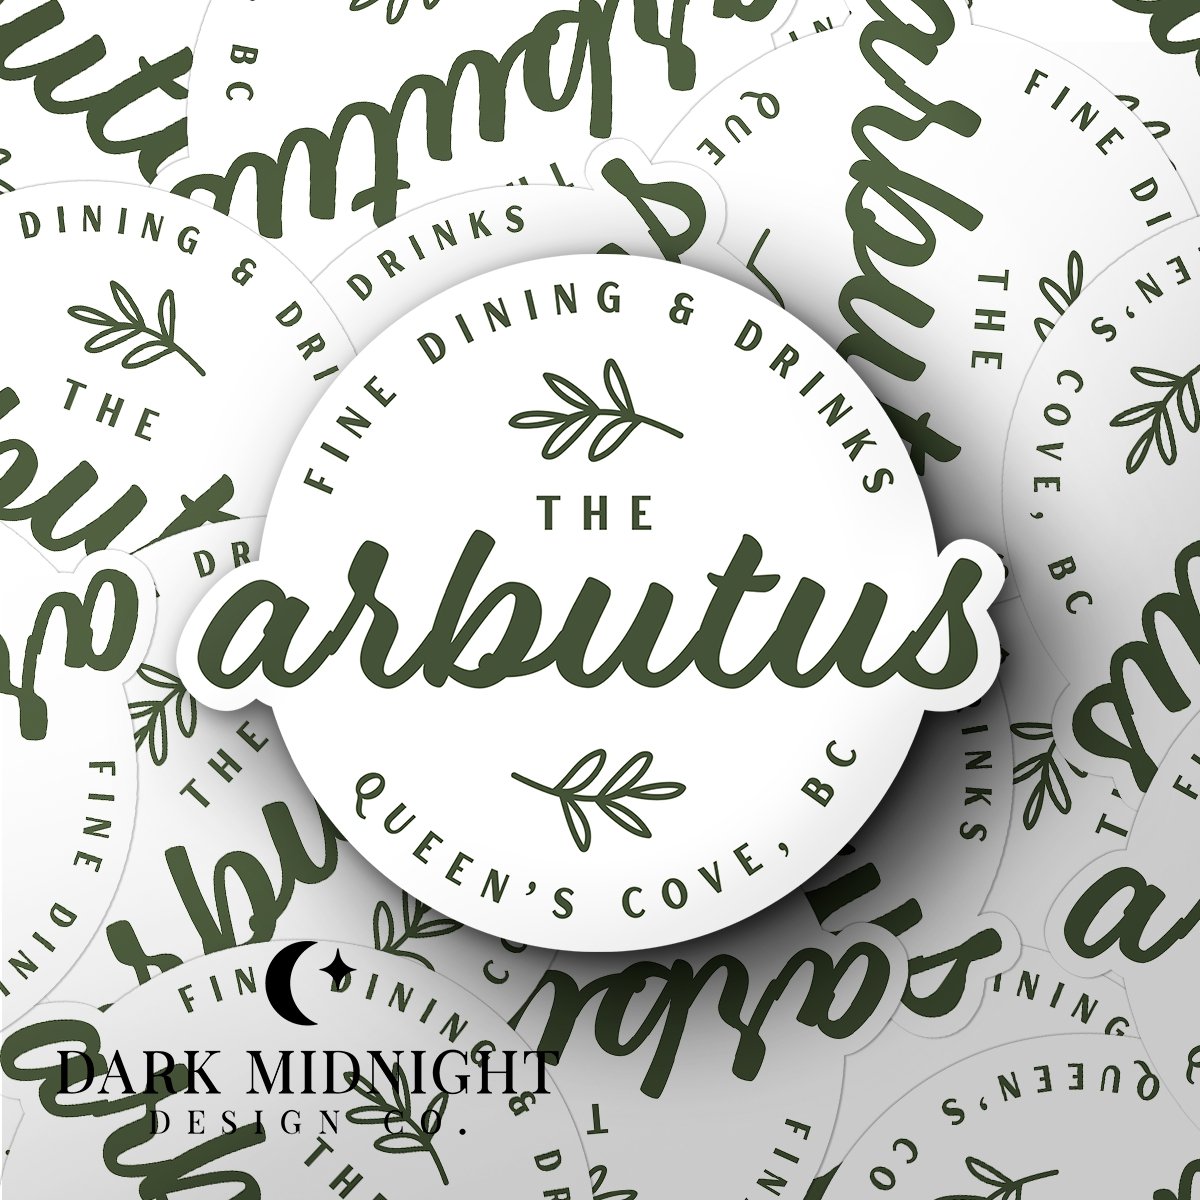 Arbutus Logo Sticker - Officially Licensed Queen's Cove Series - Dark Midnight Design Co